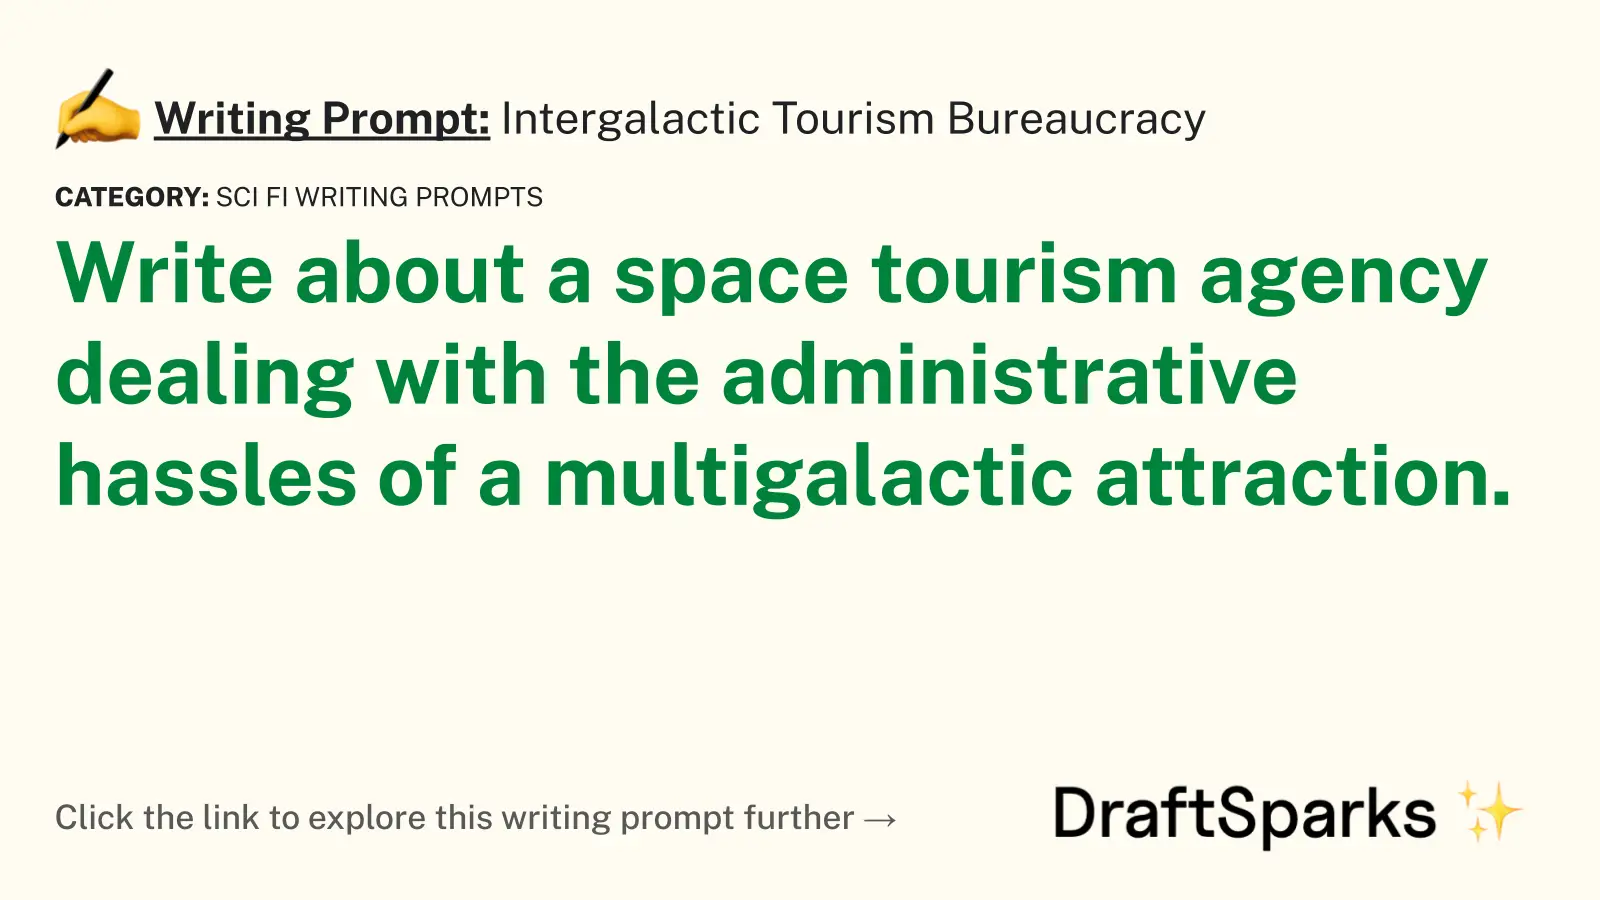 Intergalactic Tourism Bureaucracy